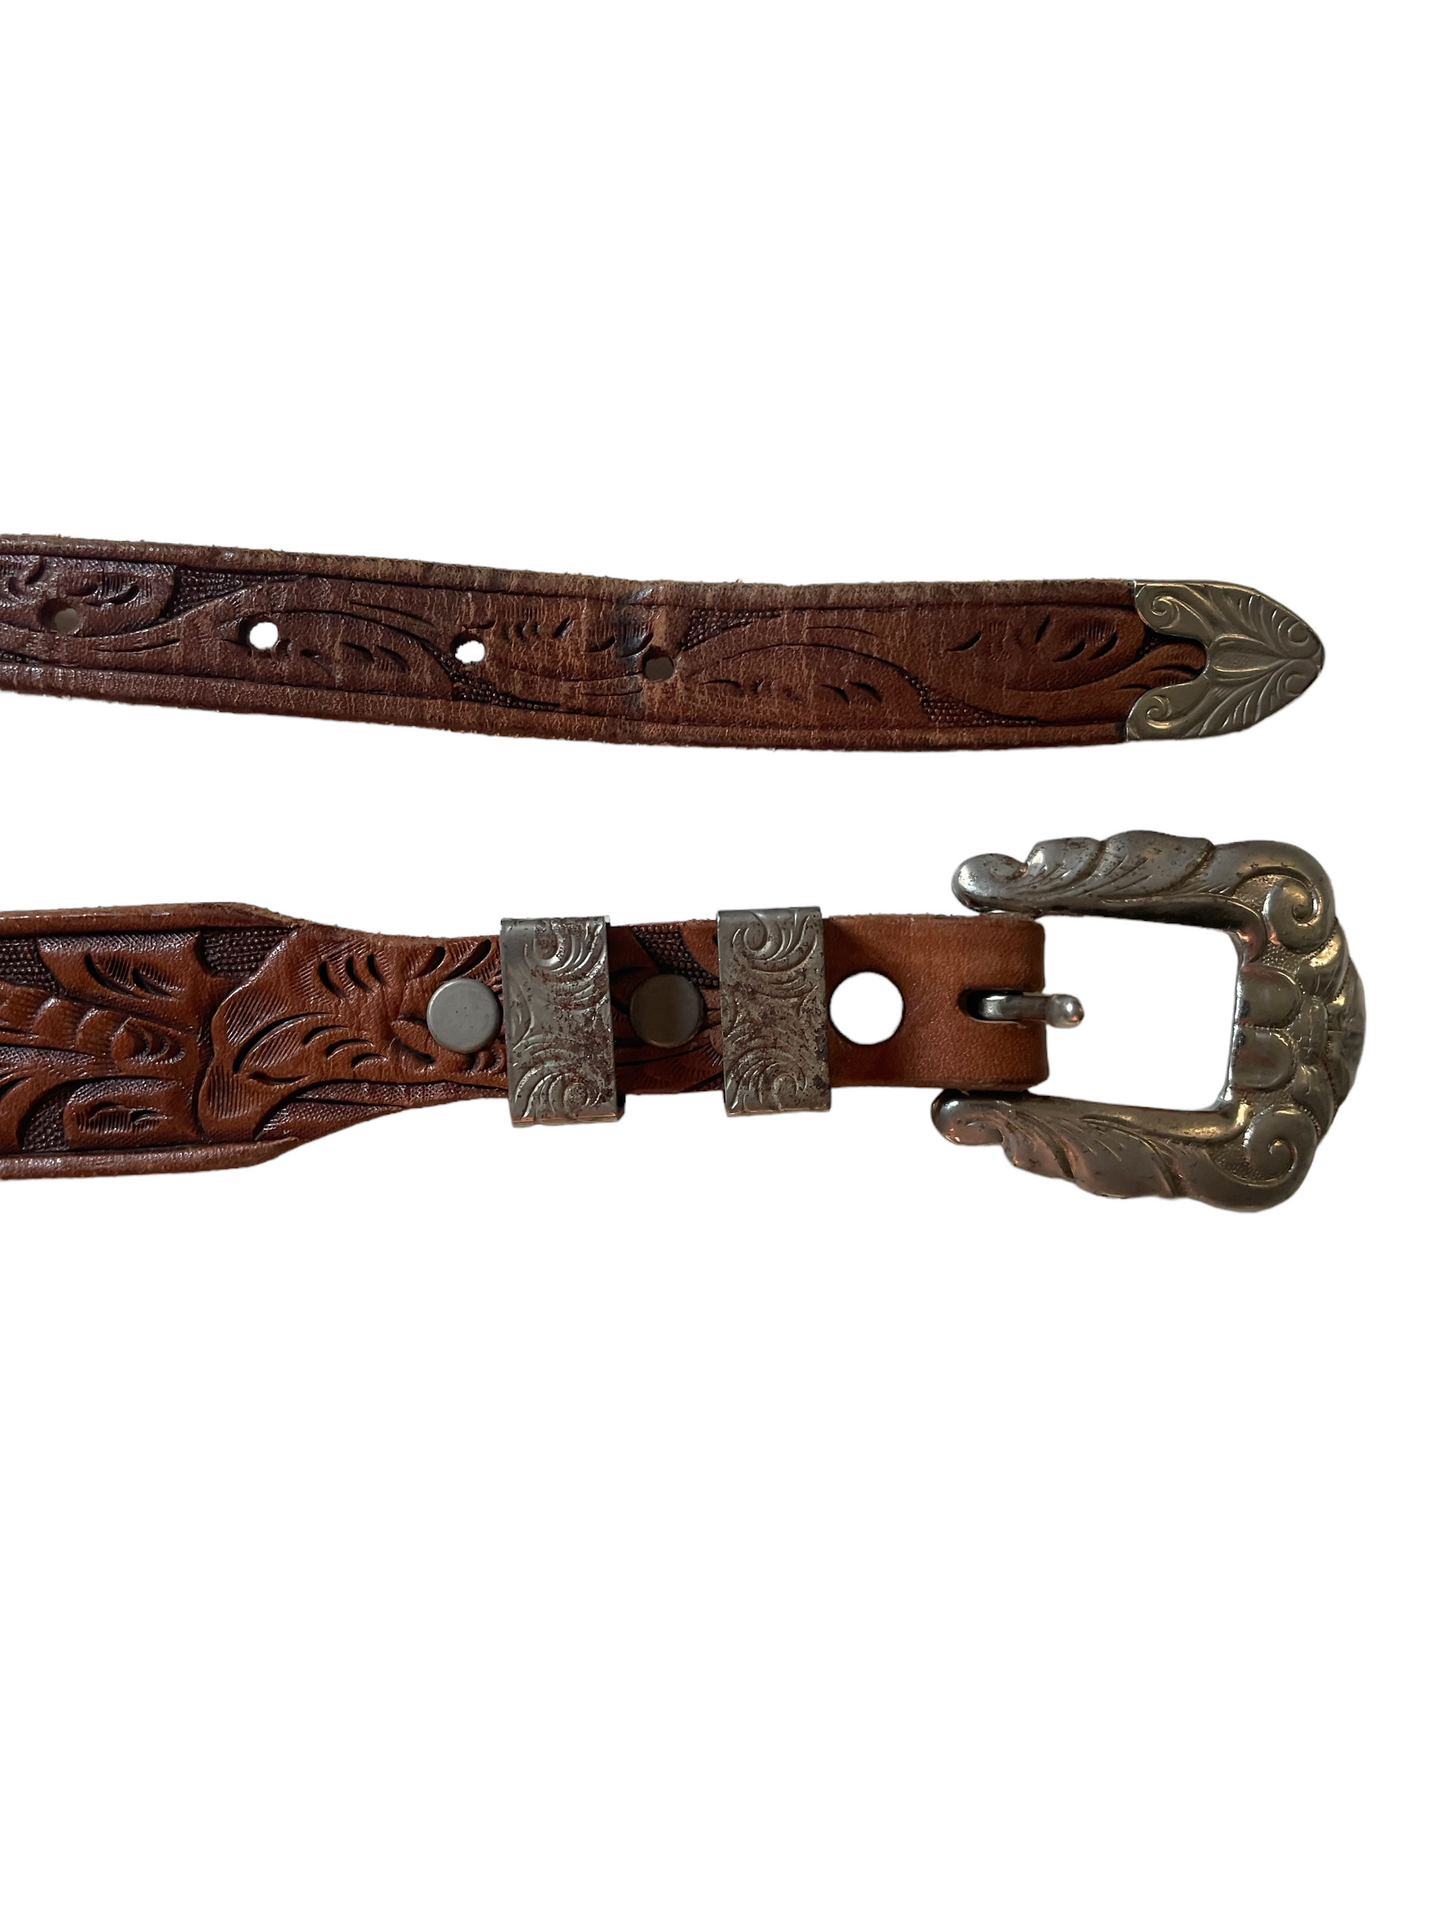 Vintage Westernaire Tooled Leather Belt with Buckle | Barn Owl Vintage | Seattle True Vintage